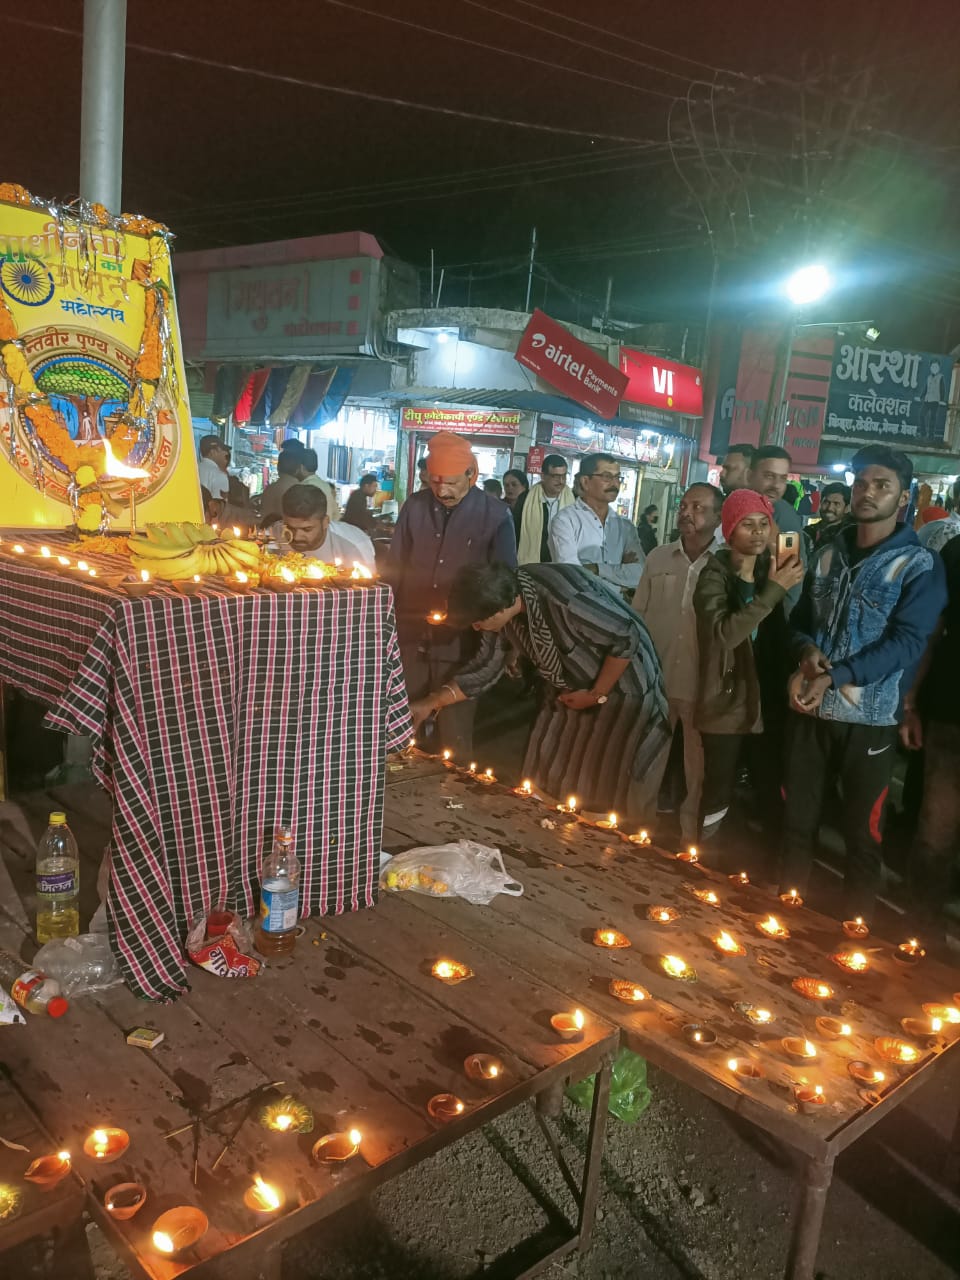 Diyas were lit in honor of the revolutionaries